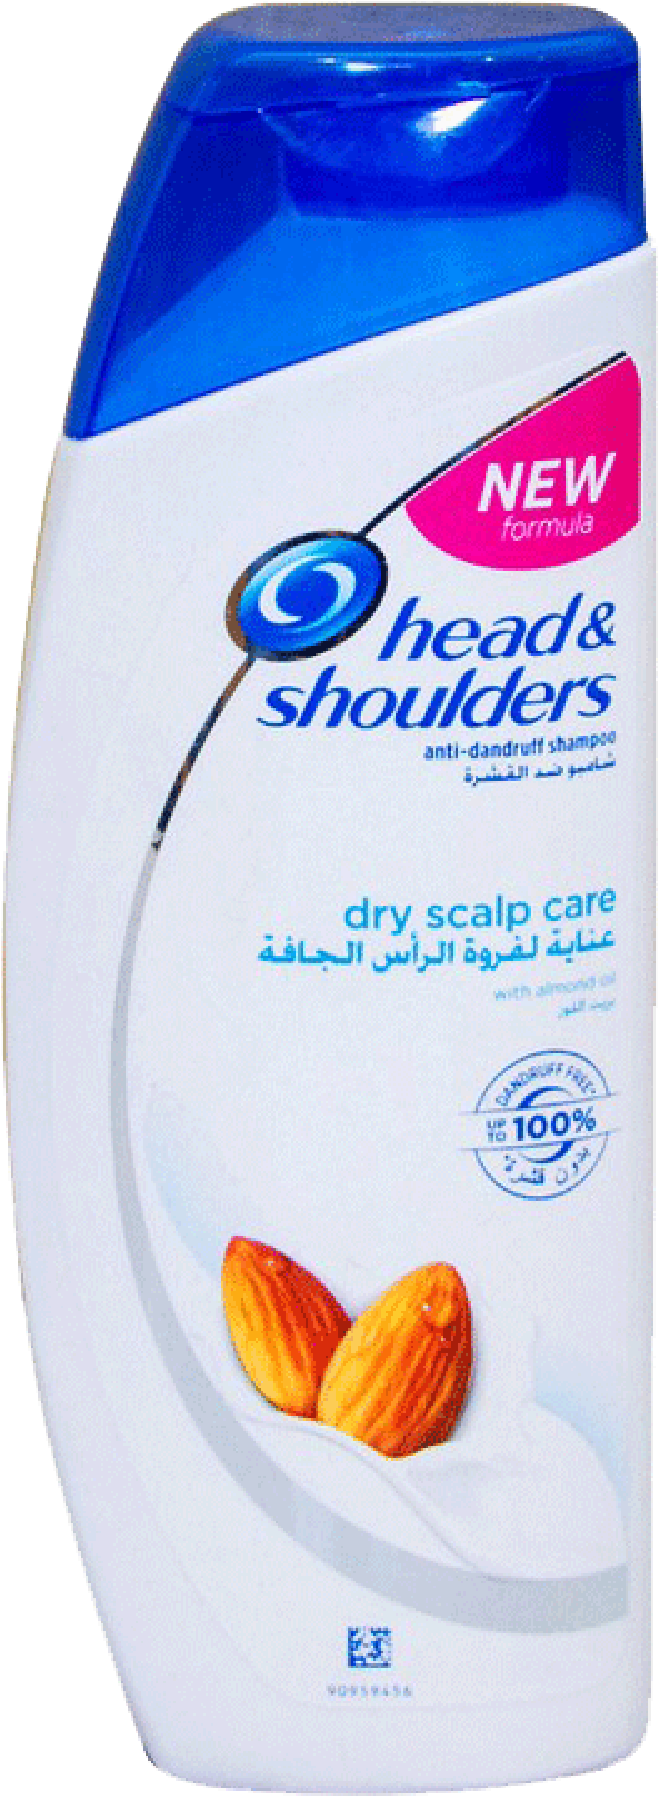 Headand Shoulders Dry Scalp Care Shampoo Bottle